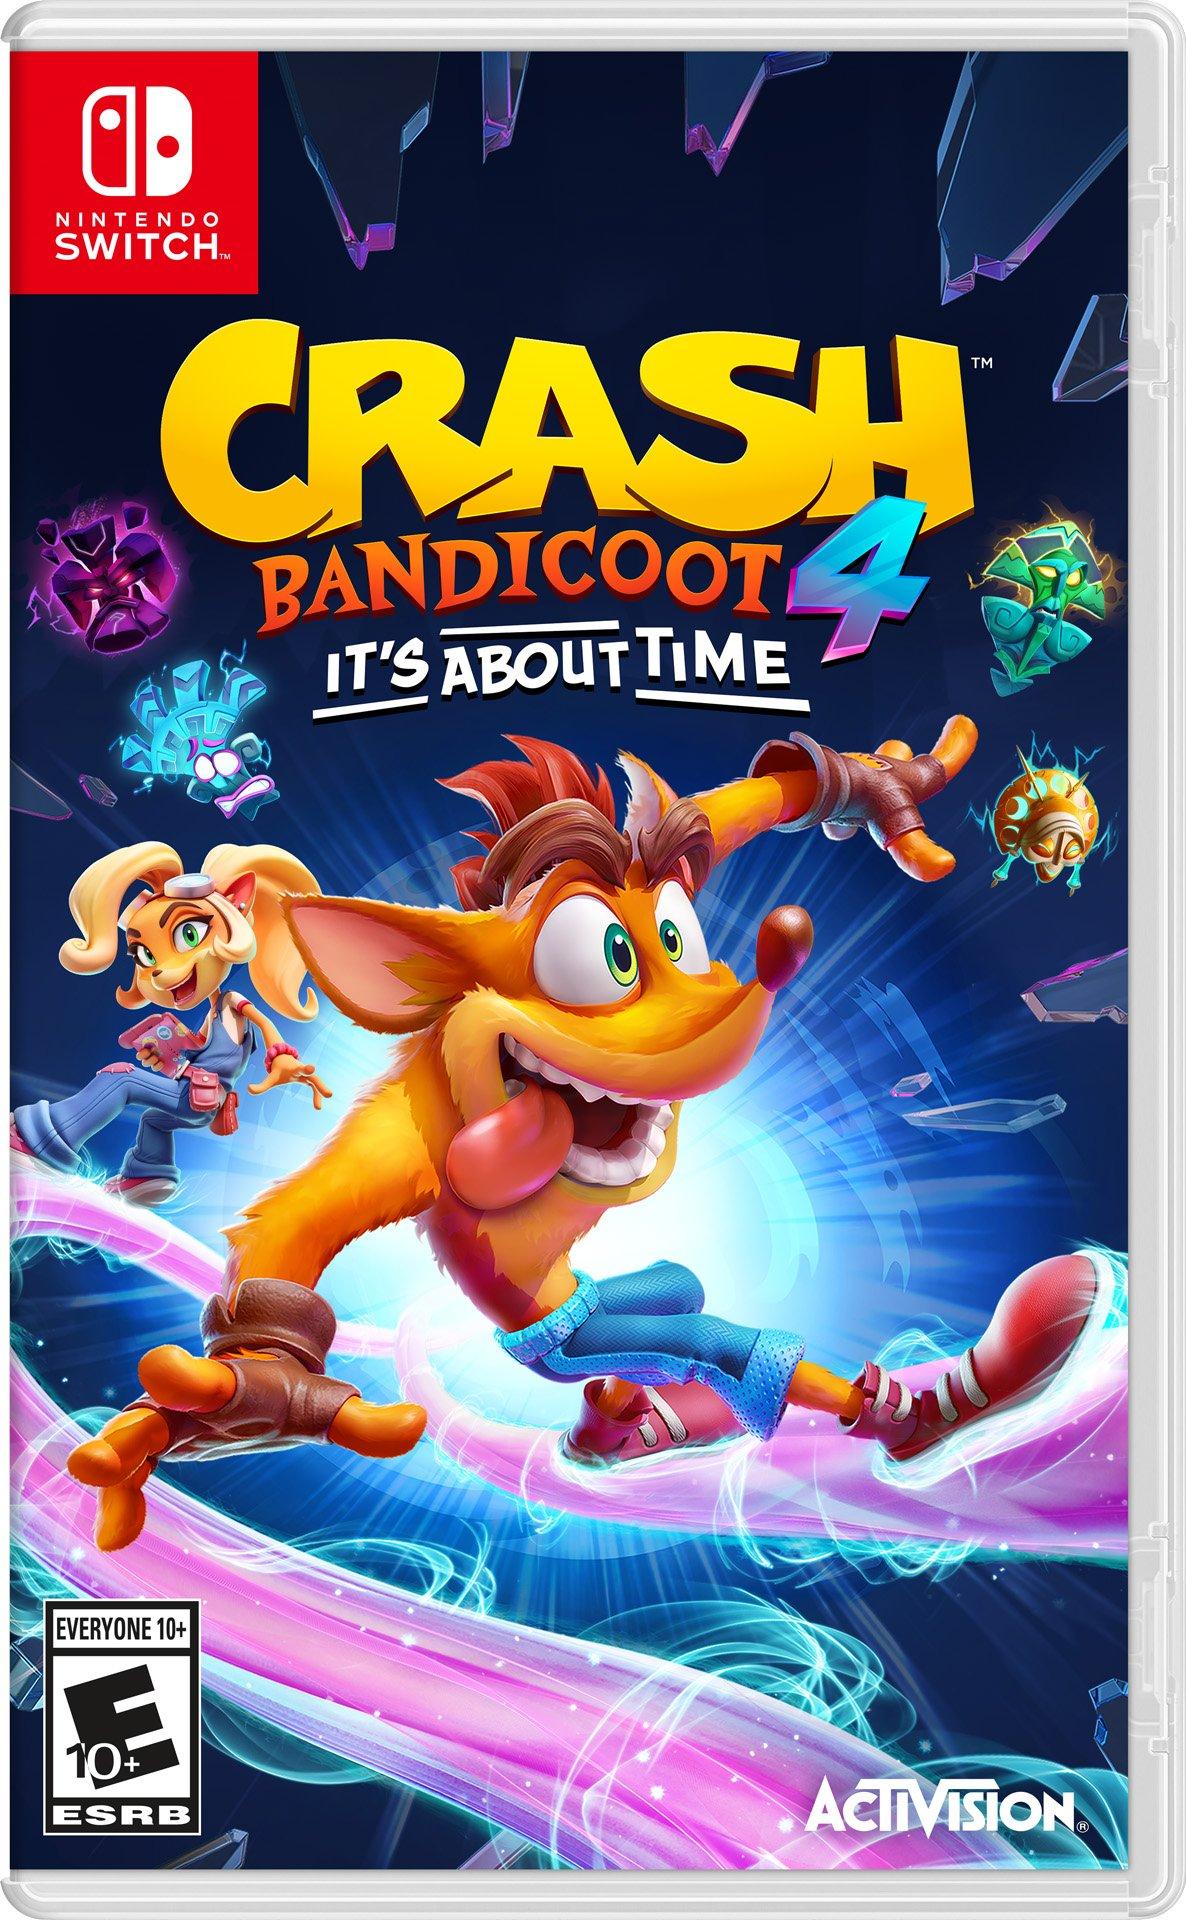 Crash Bandicoot 4: It's Time Nintendo Switch